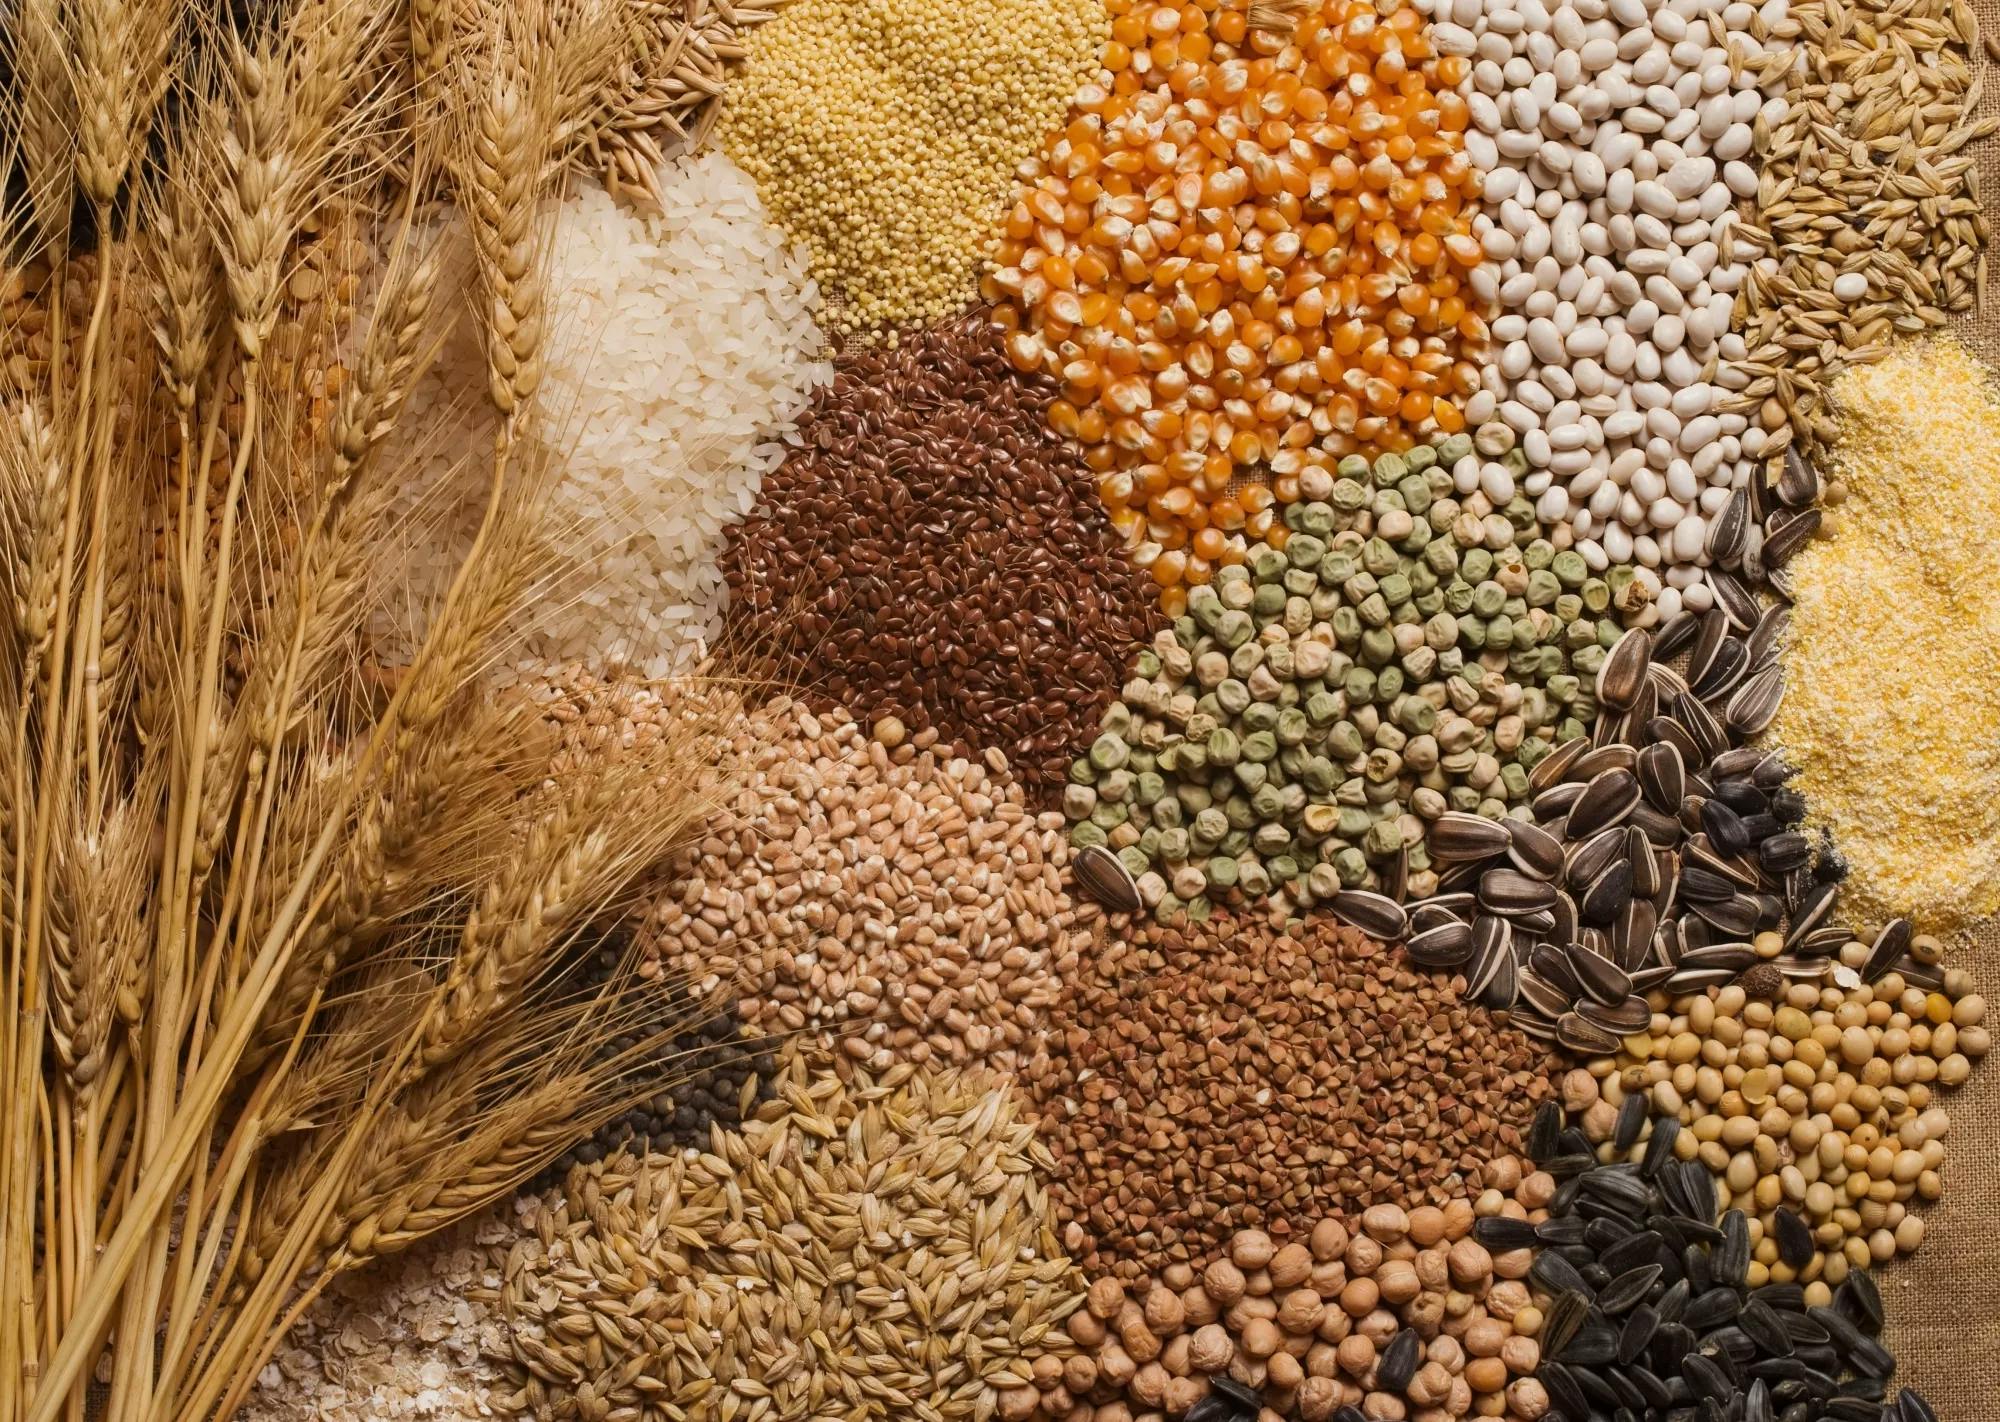 Many different grain varieties